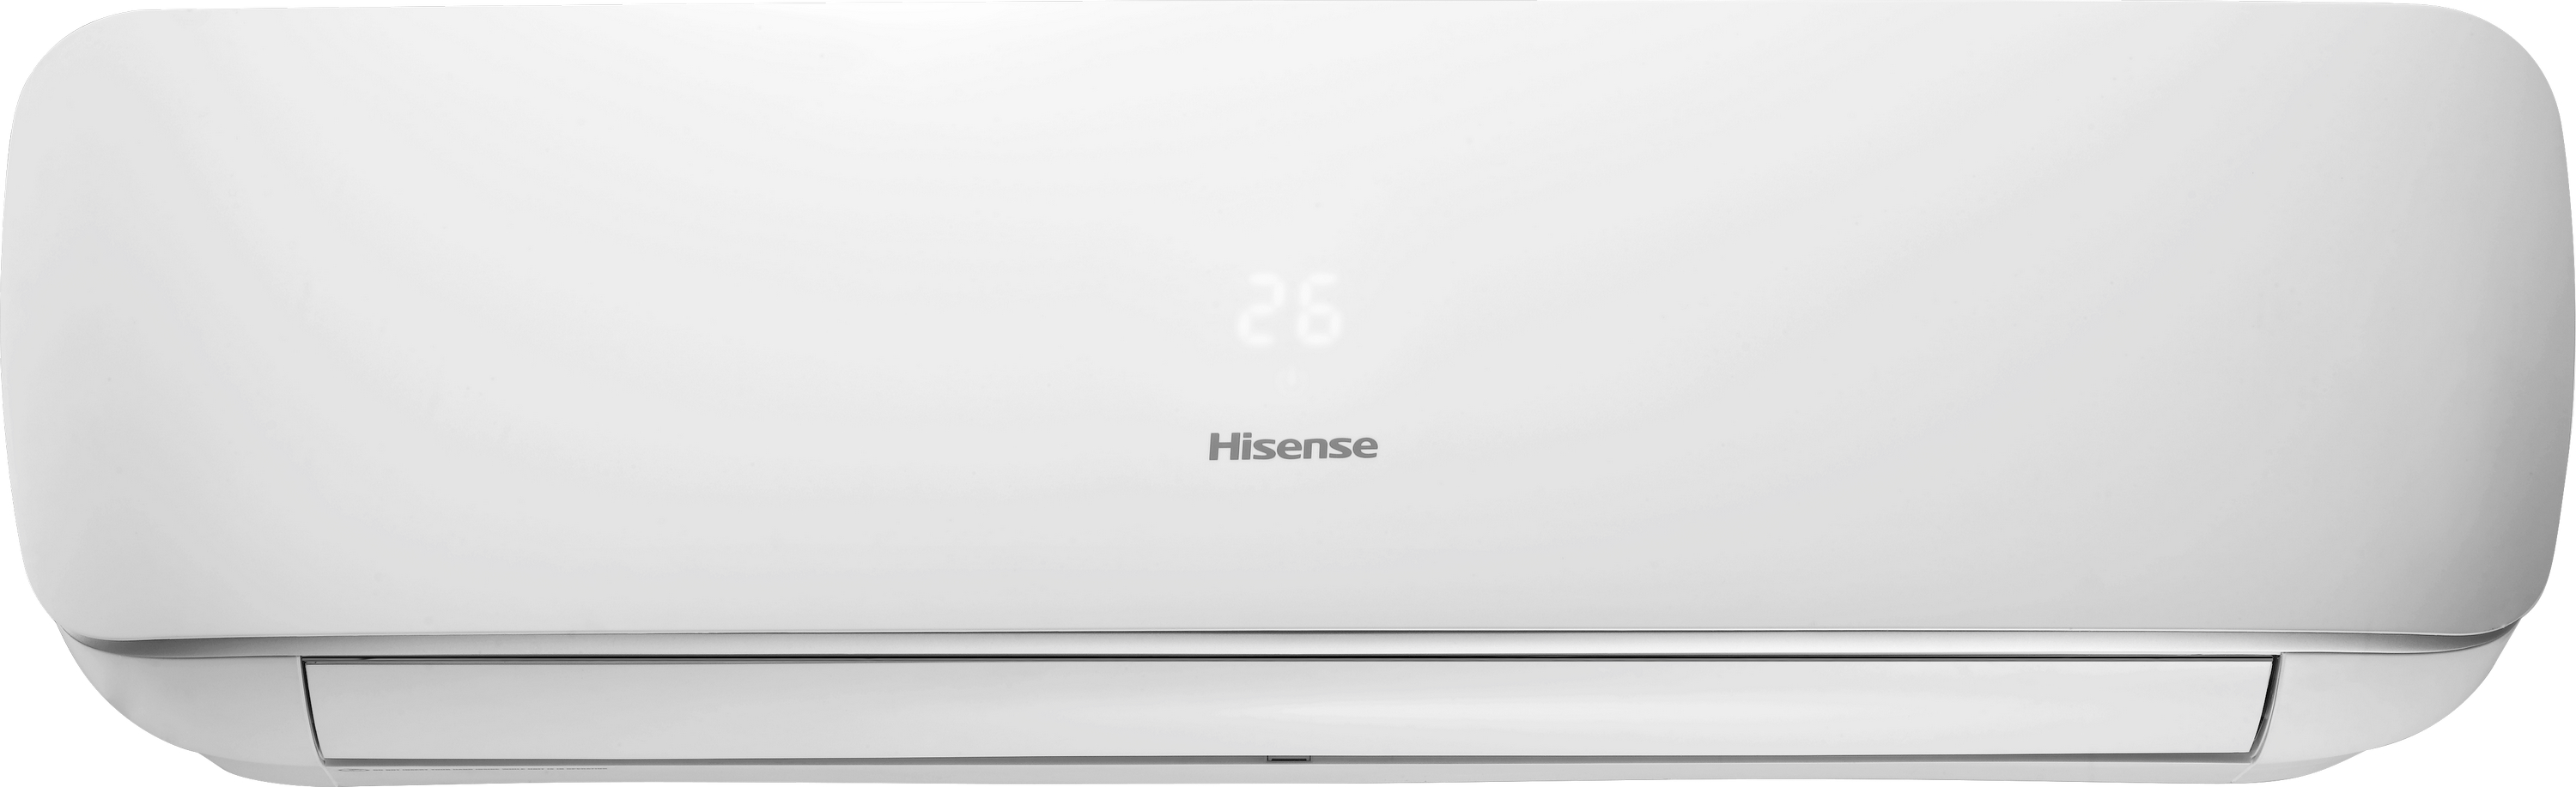 Кондиционер сплит-система Hisense Apple Pie R32 TG35VE0A цена 0.00 грн - фотография 2